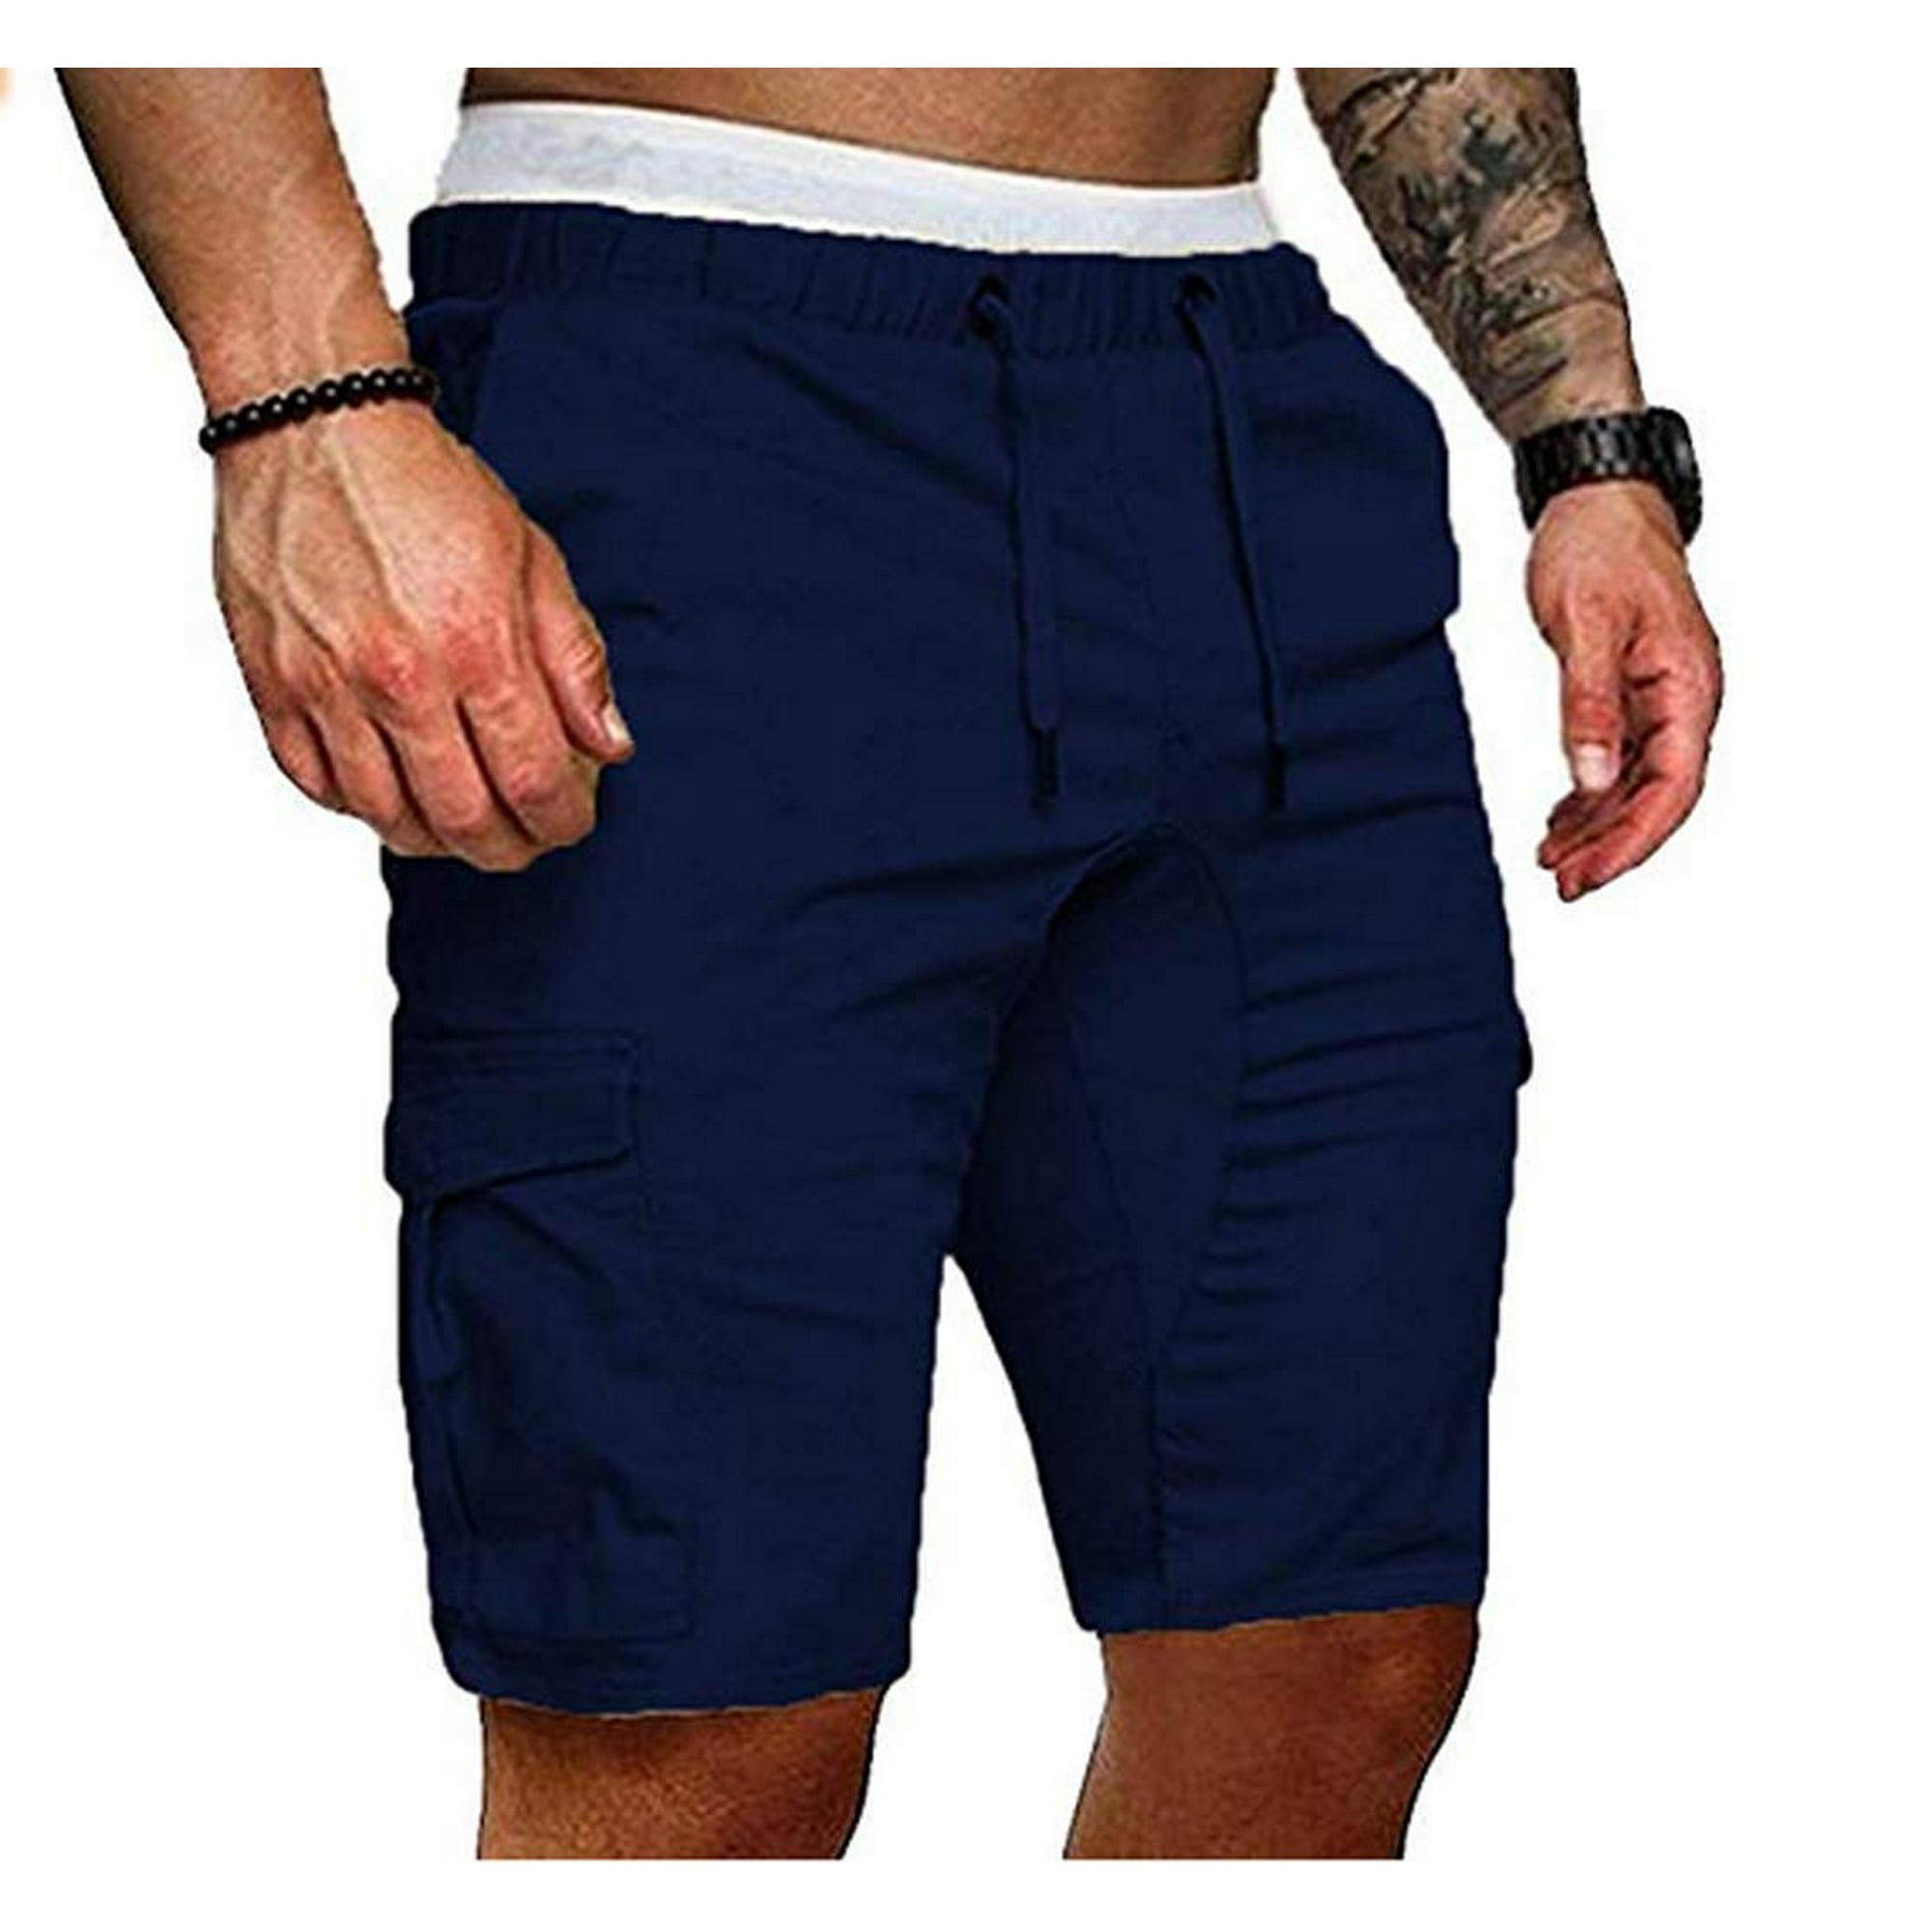 Txlixc Pantalones cortos de gimnasia para hombre, pantalones cortos de color  puro para estiramiento diario Txlixc Moda